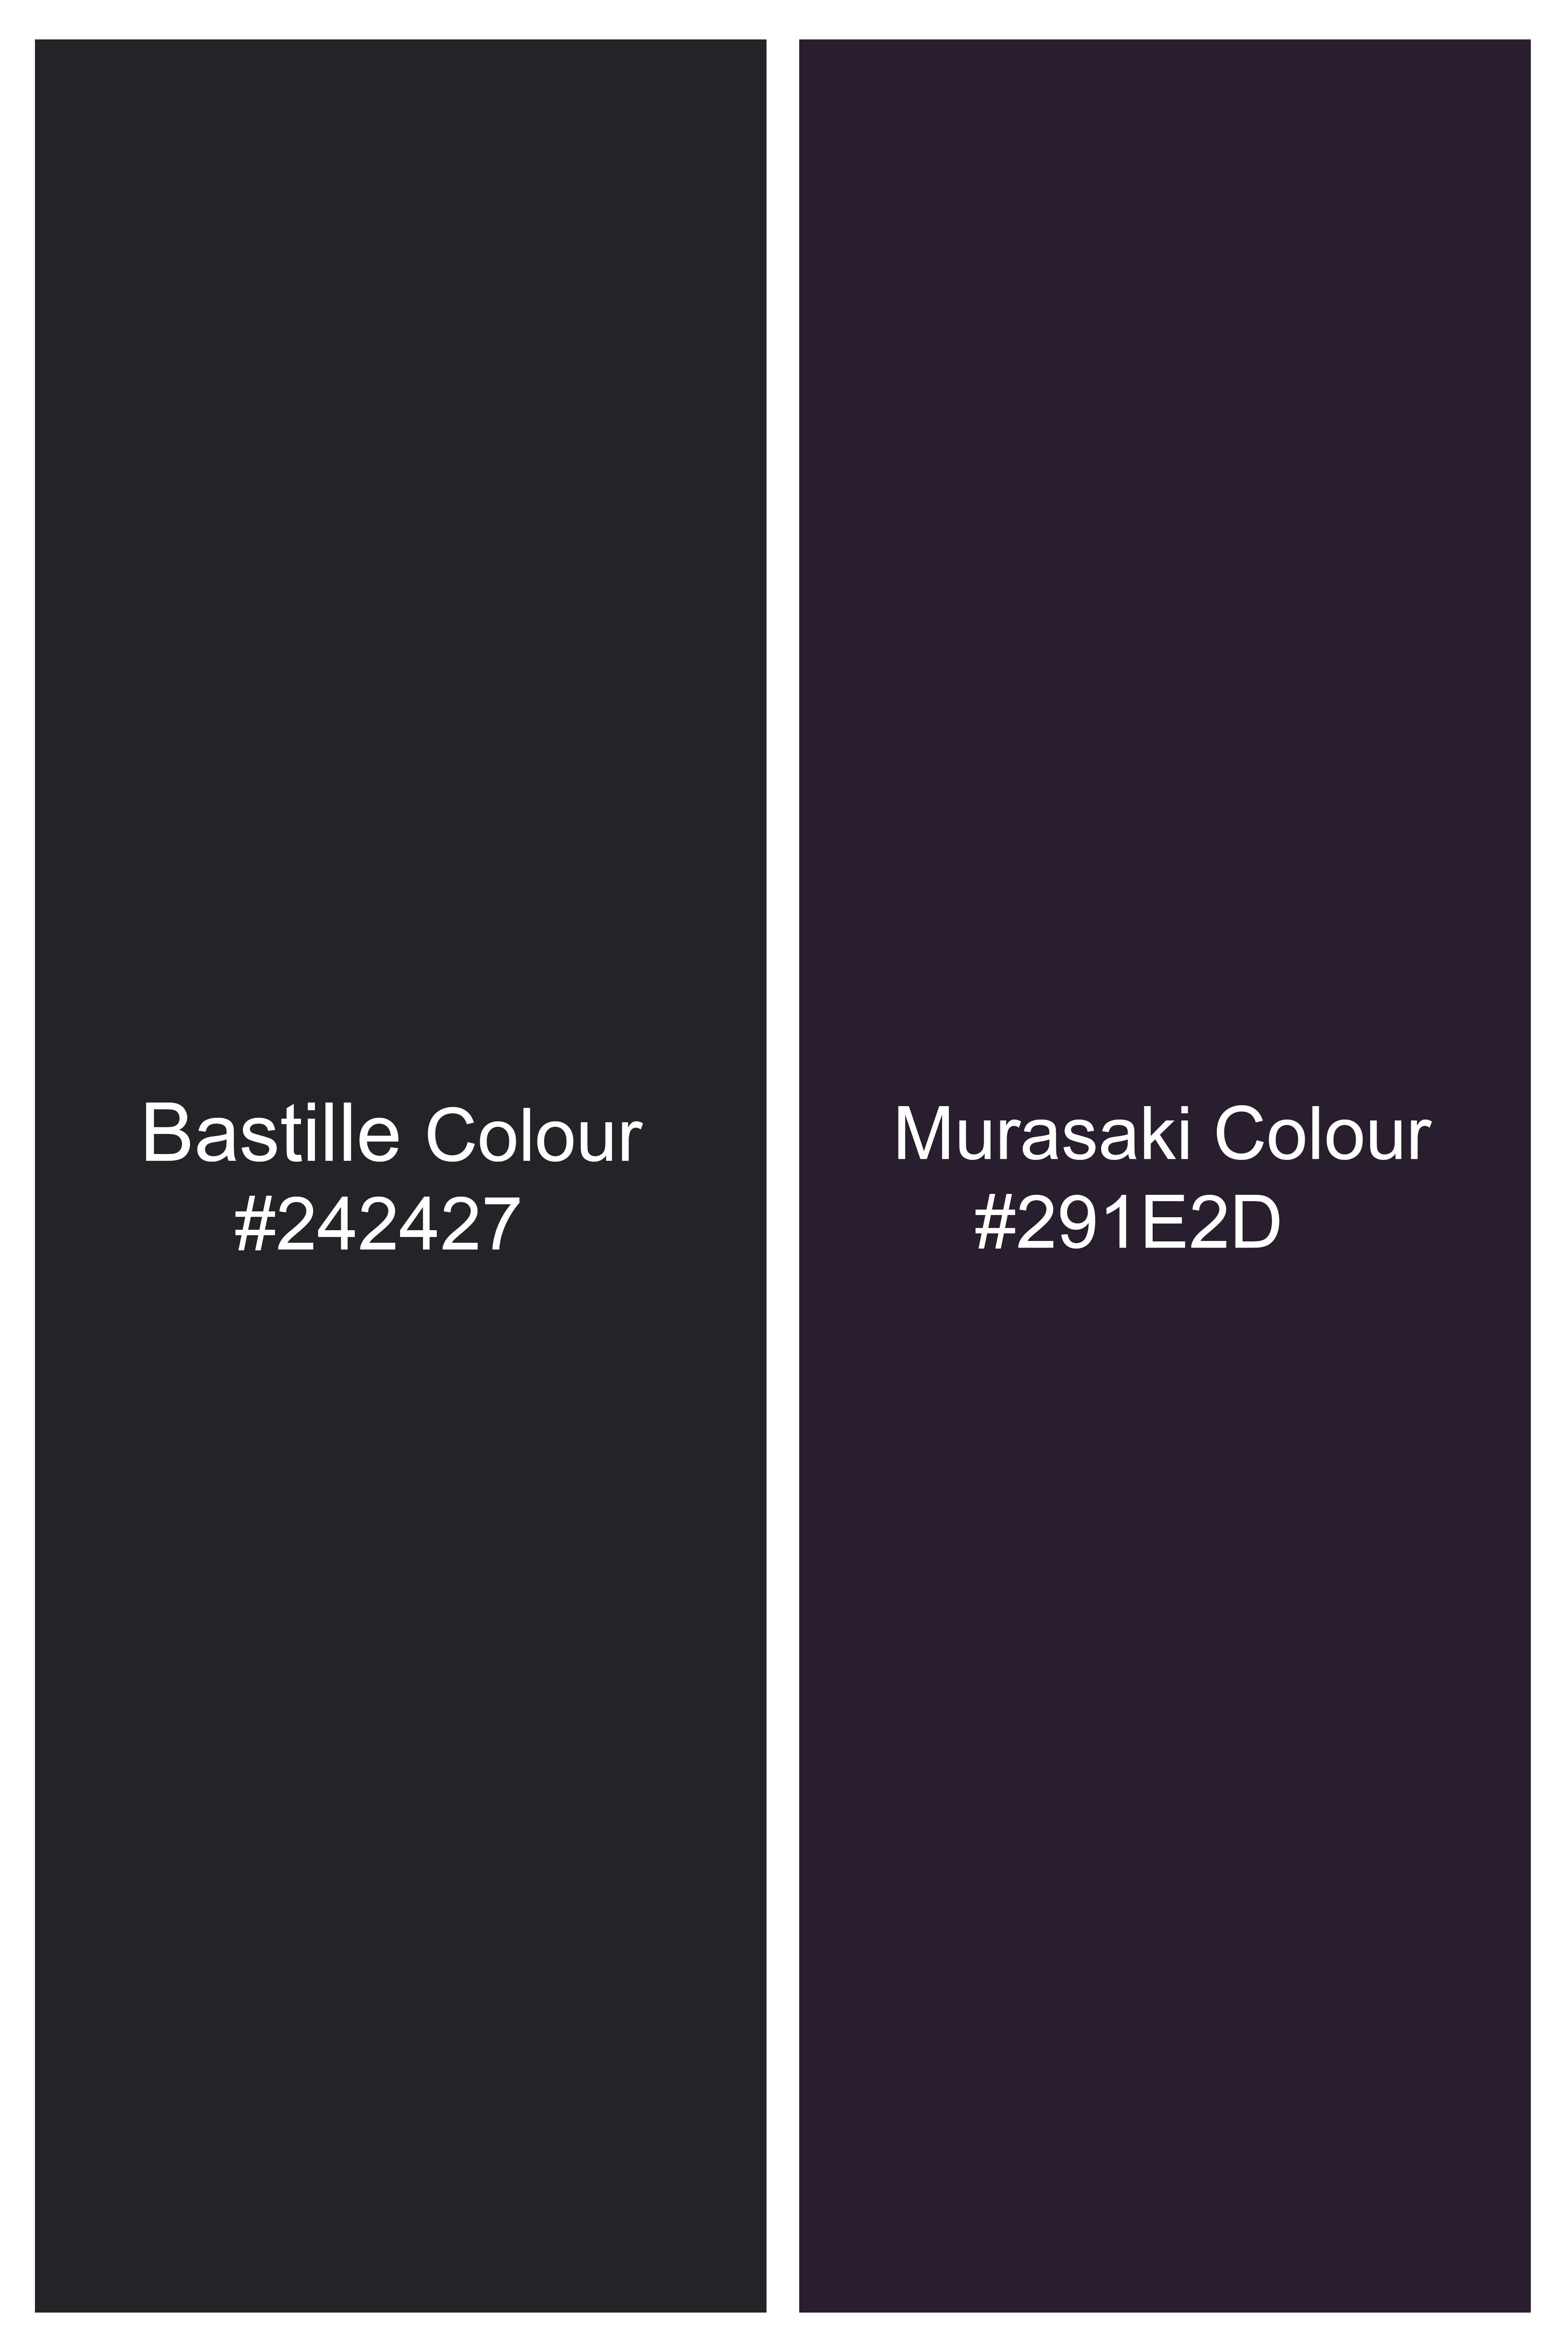 Bastille Black and Murasaki Purple Windowpane Cross Buttoned Wool Rich Bandhgala Suit ST3063-CBG2-36, ST3063-CBG2-38, ST3063-CBG2-40, ST3063-CBG2-42, ST3063-CBG2-44, ST3063-CBG2-46, ST3063-CBG2-48, ST3063-CBG2-50, ST3063-CBG2-52, ST3063-CBG2-54, ST3063-CBG2-56, ST3063-CBG2-58, ST3063-CBG2-60